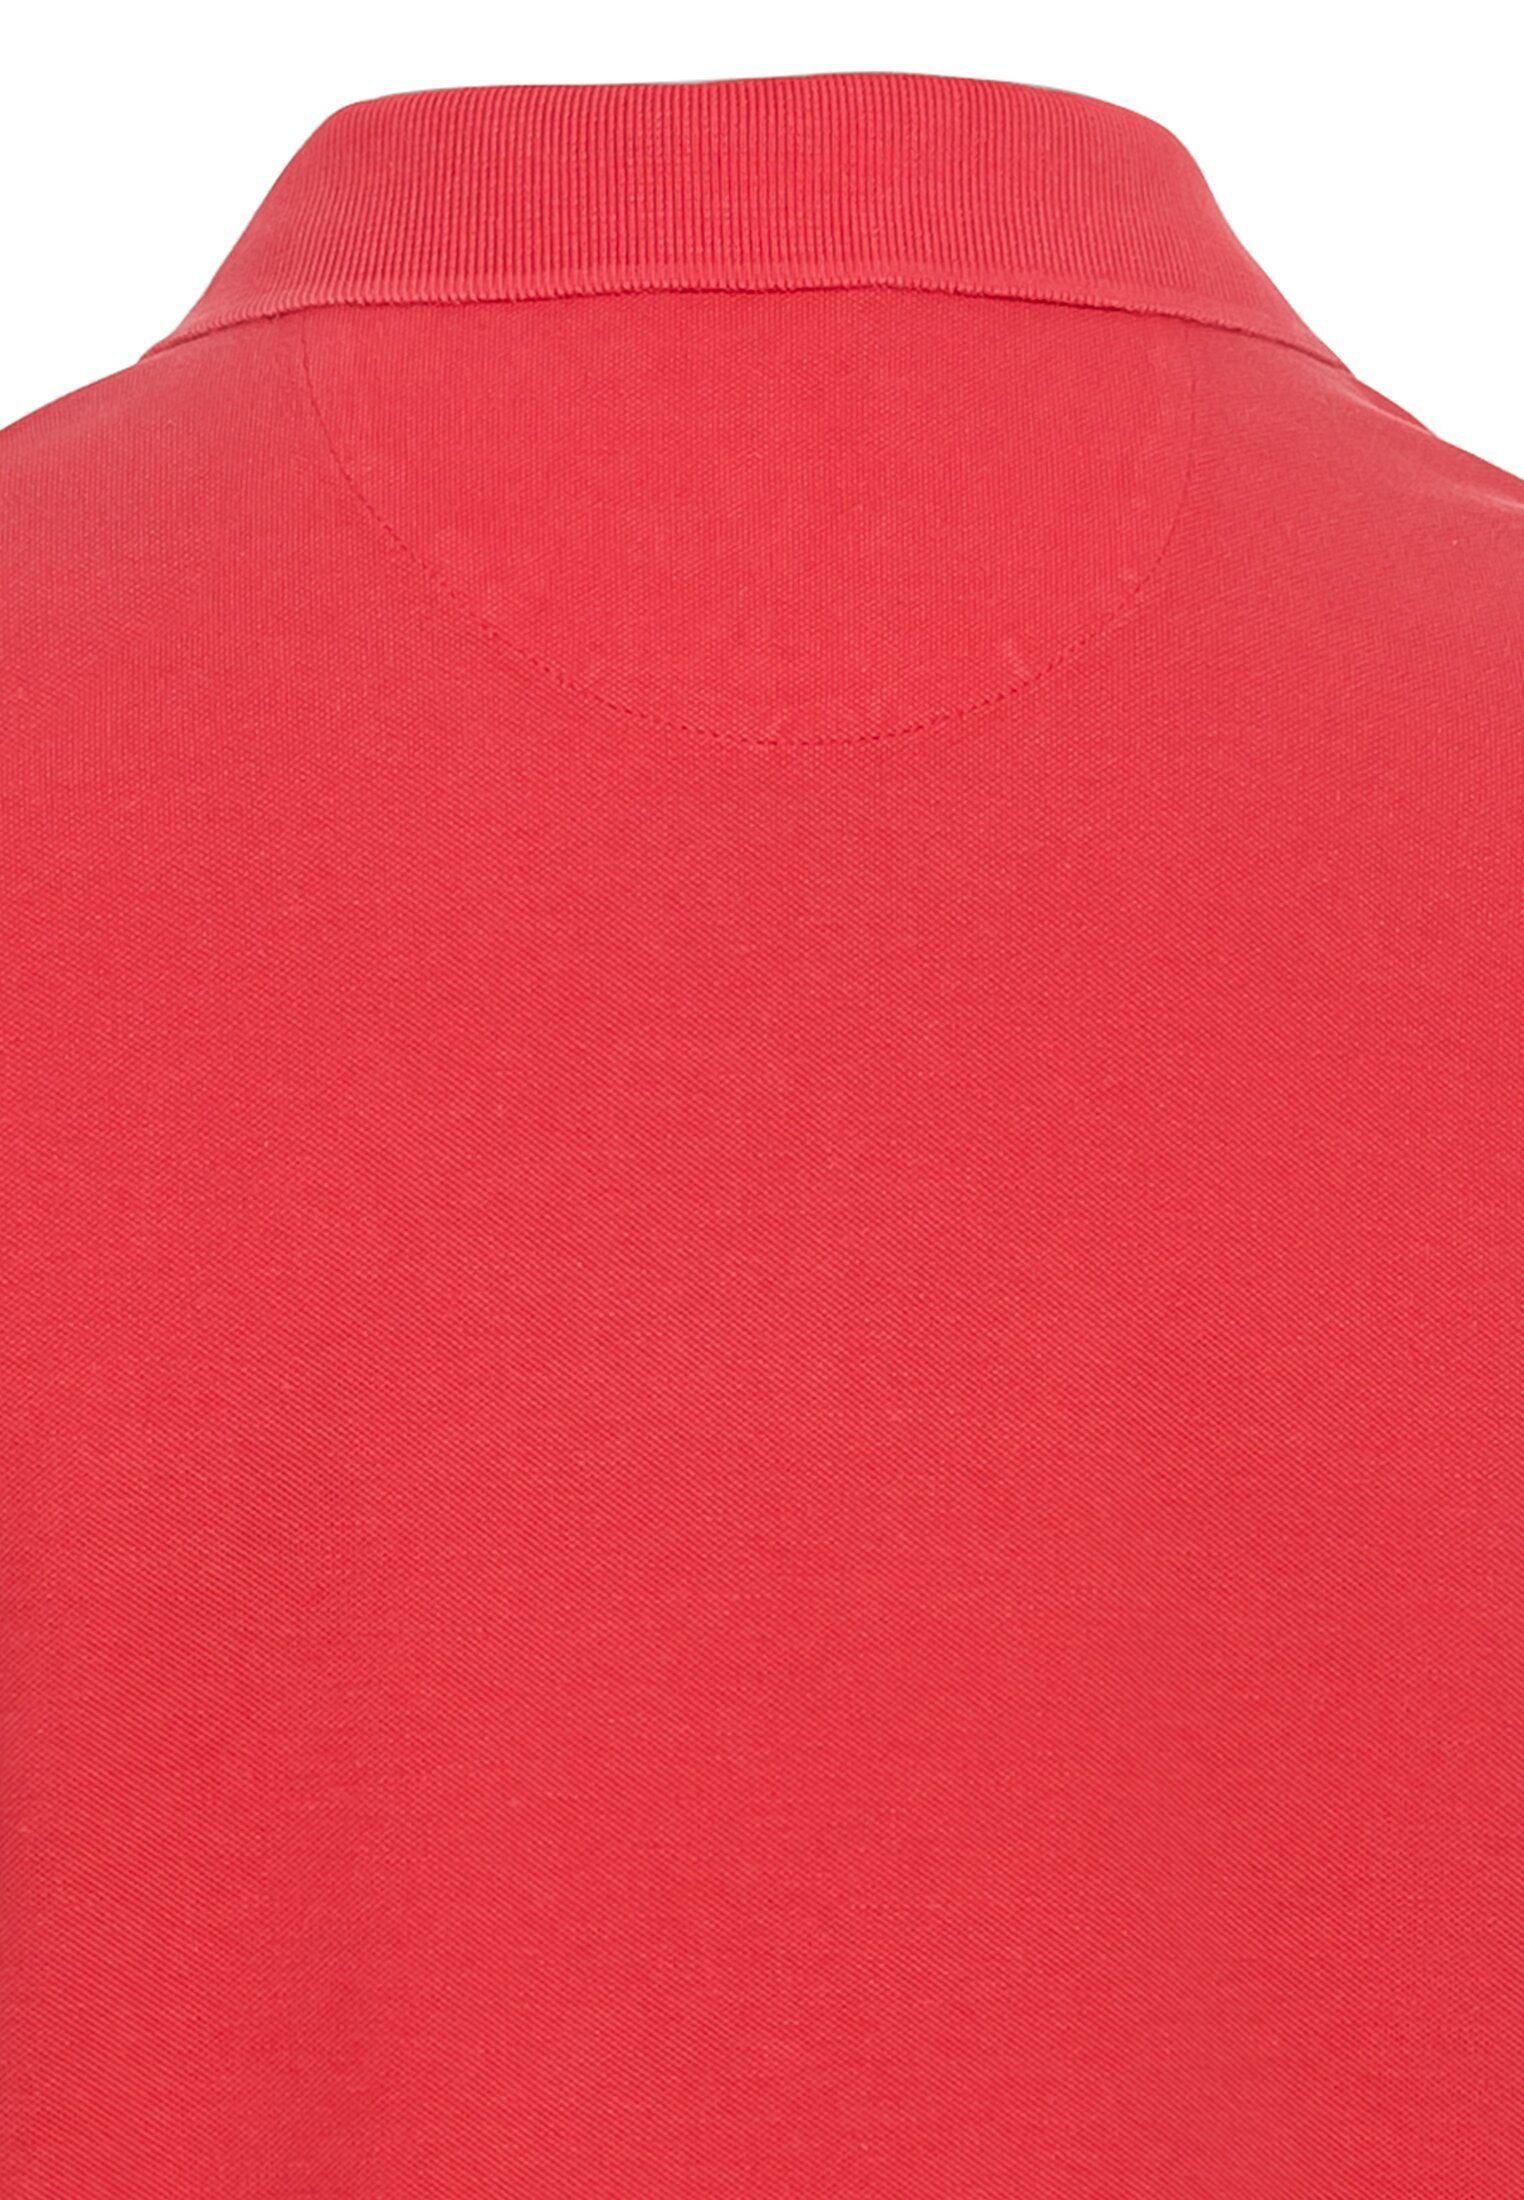 Poloshirt Rot Baumwolle active camel reiner Shirts_Poloshirt aus